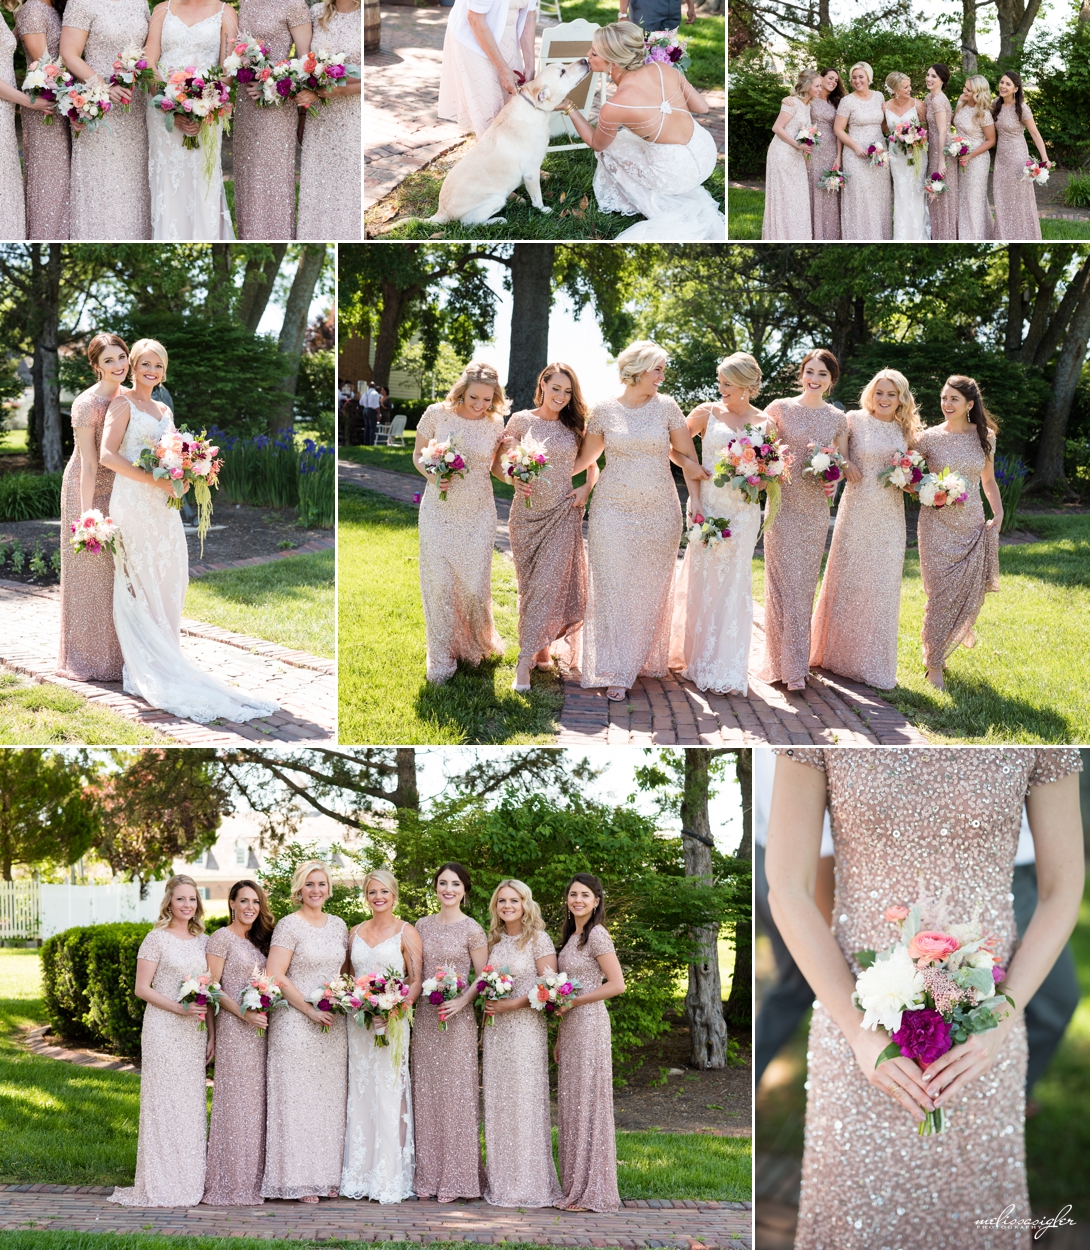 Adrianna Papell sequin bridesmaids dress